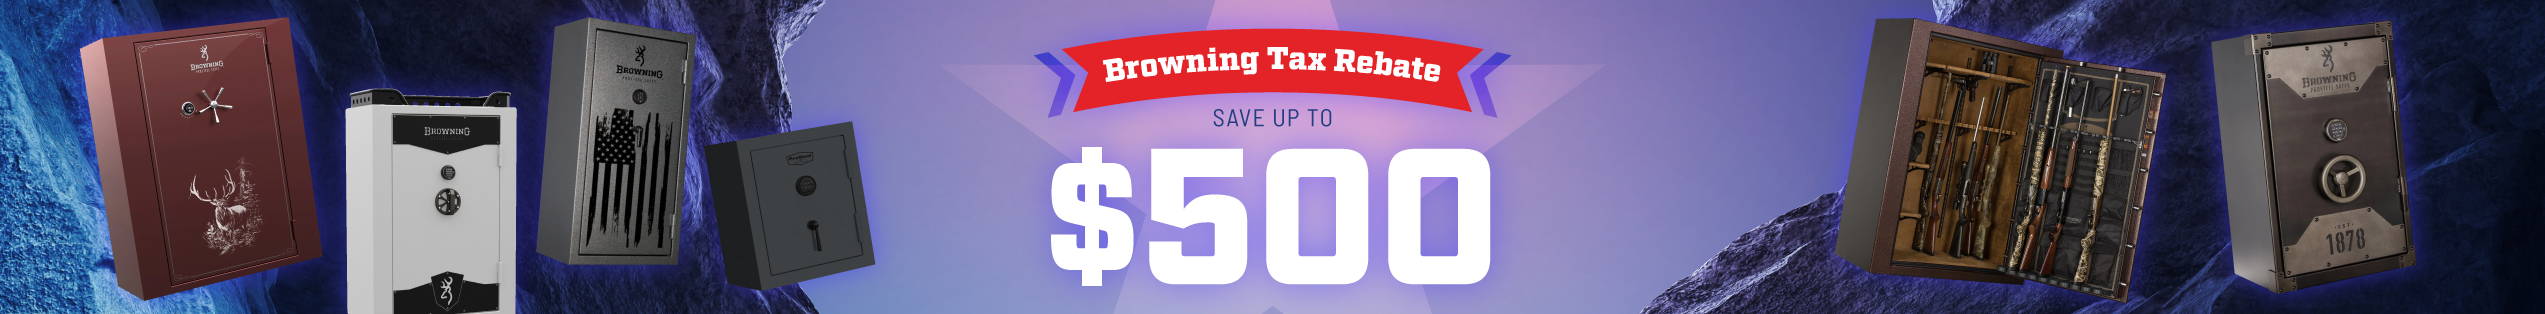 Browning Tax Rebate - Save Up to $500